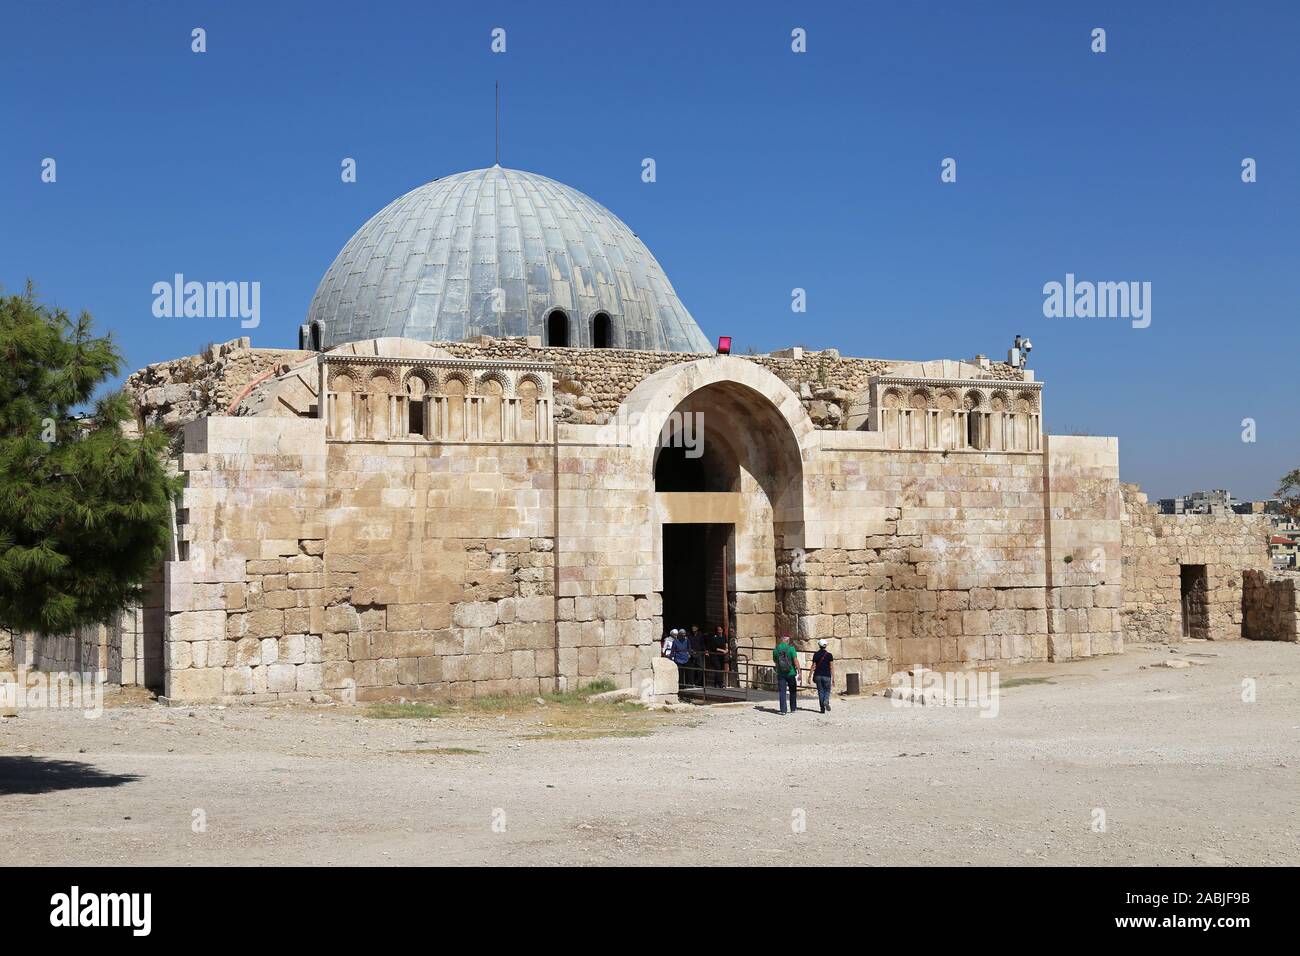 Great Audience Hall, Umayyad Palace, Citadel, Ali Ben Al Hussein Street, Jabal Al Qalah, Amman, Jordan, Middle East Stock Photo